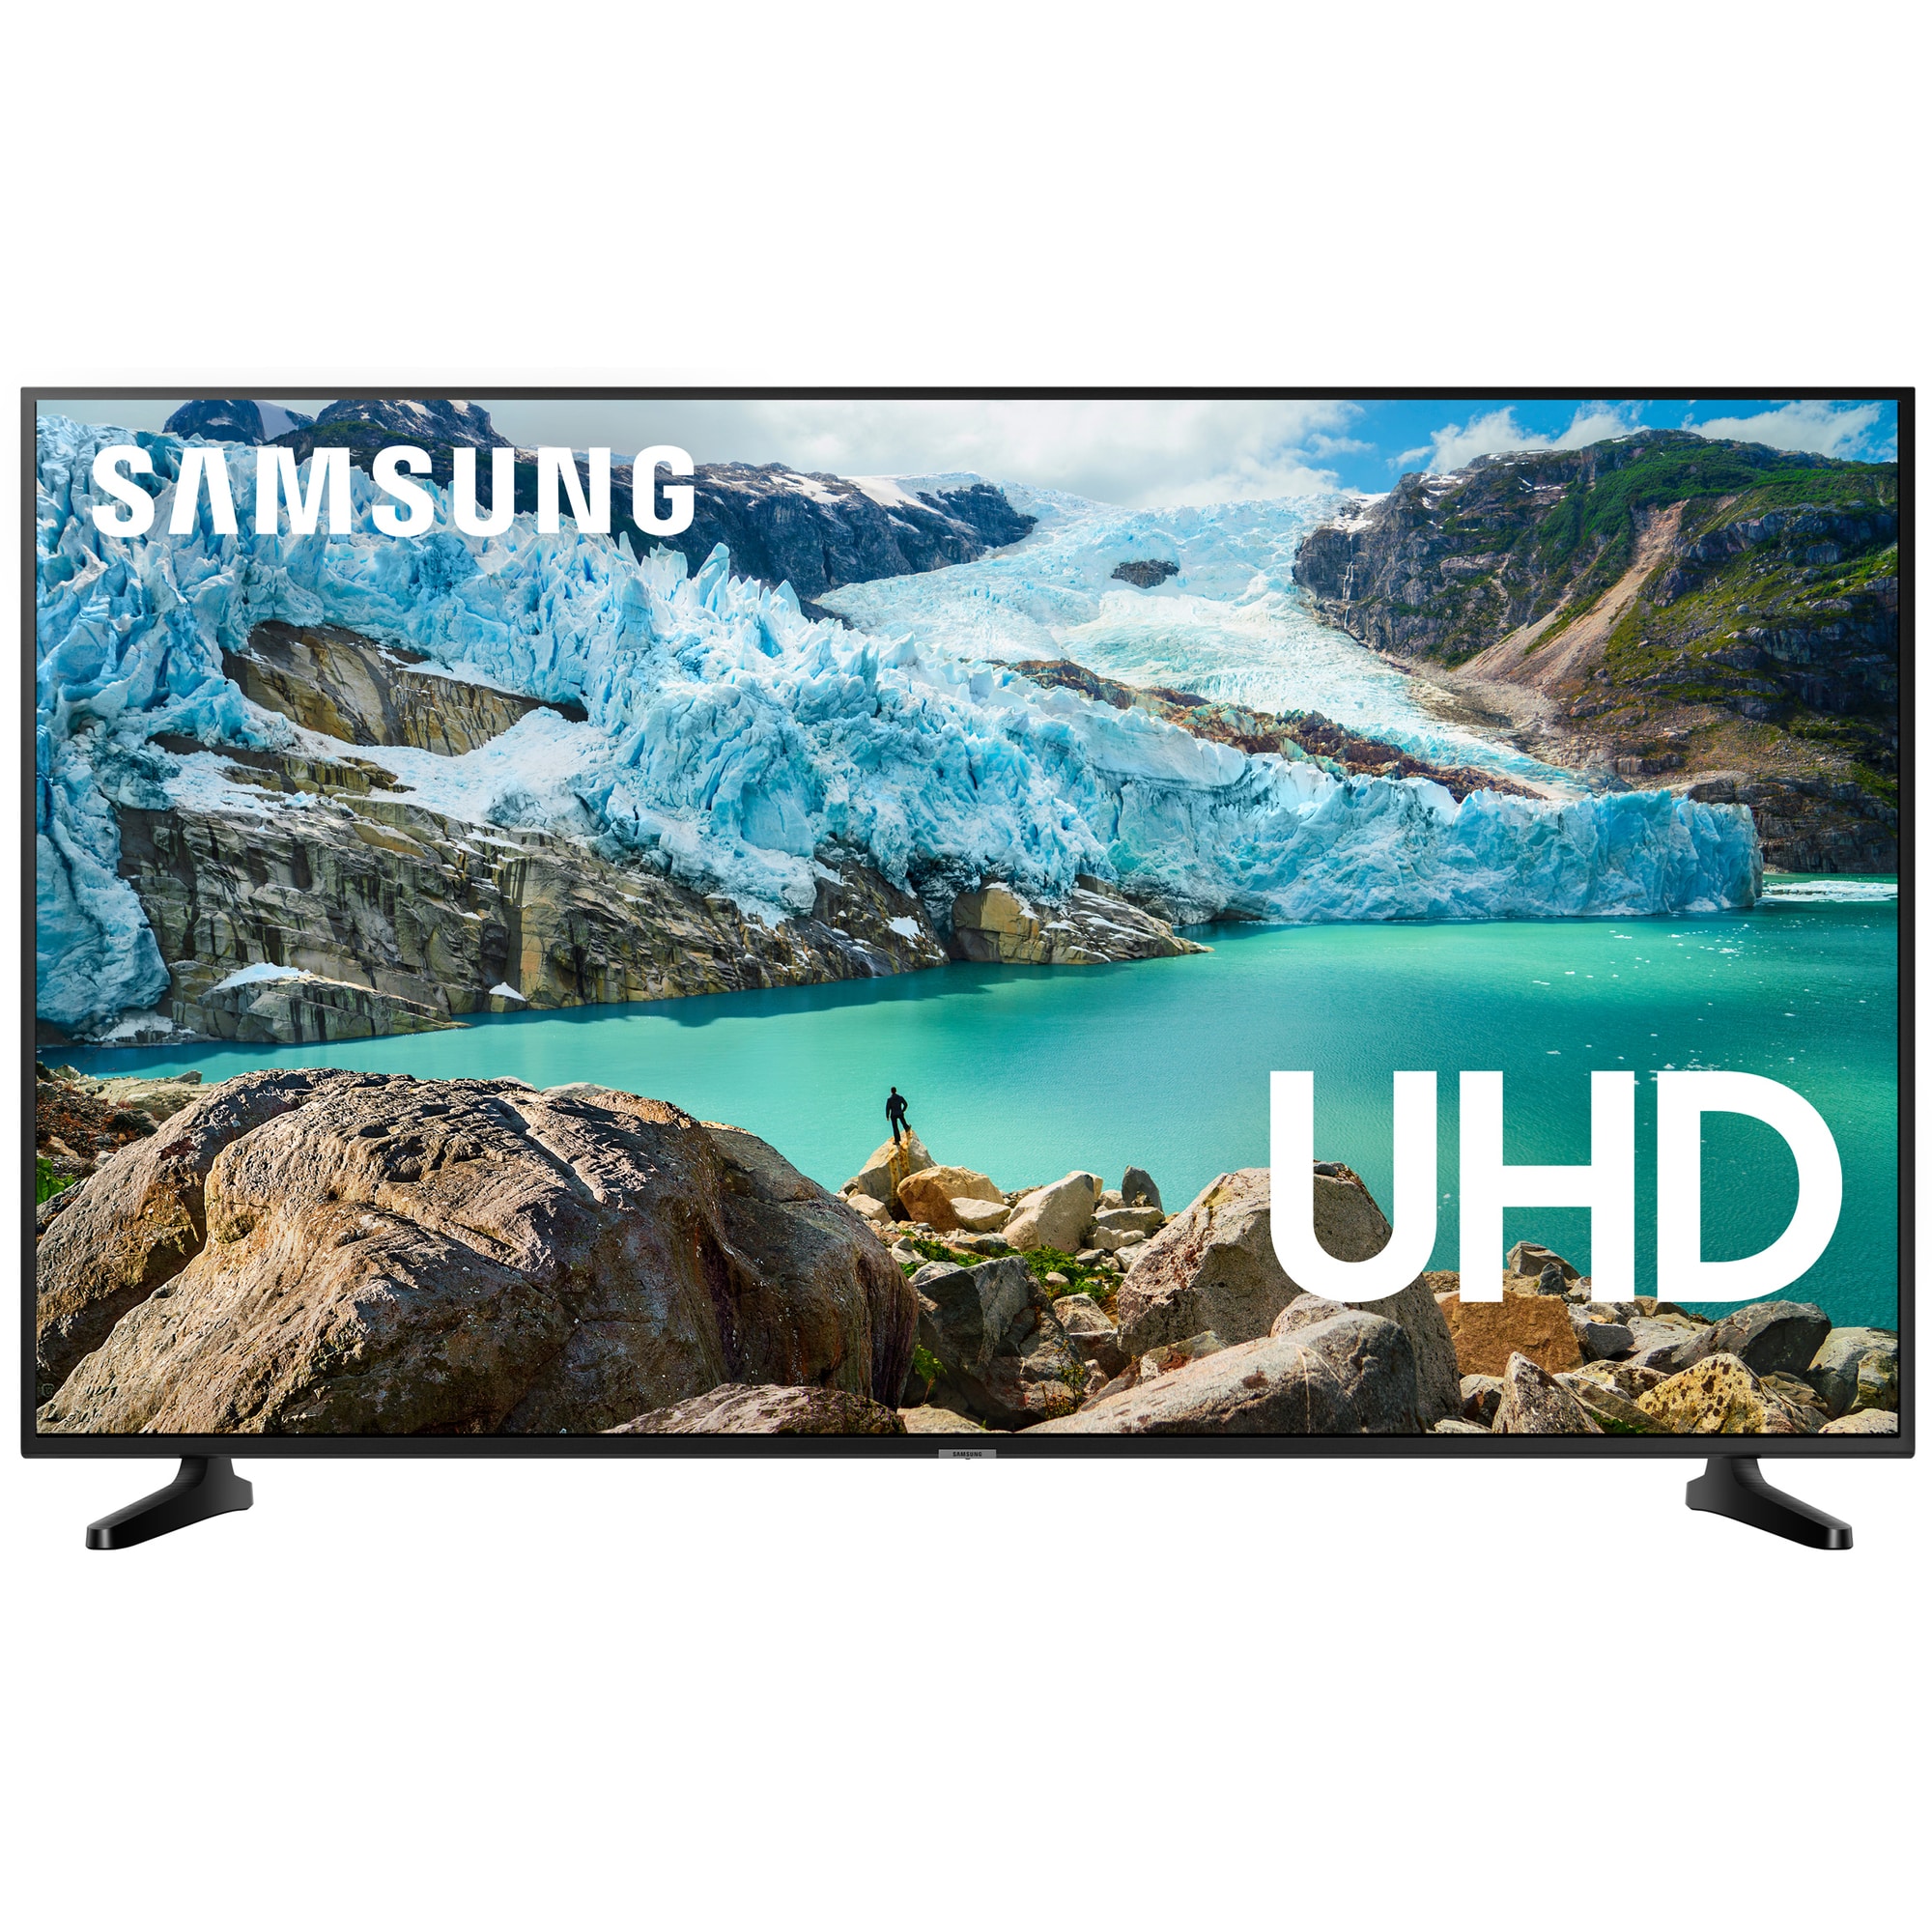 Samsung RU6025 4K UHD TV UE65RU6025 (2019) | Elgiganten